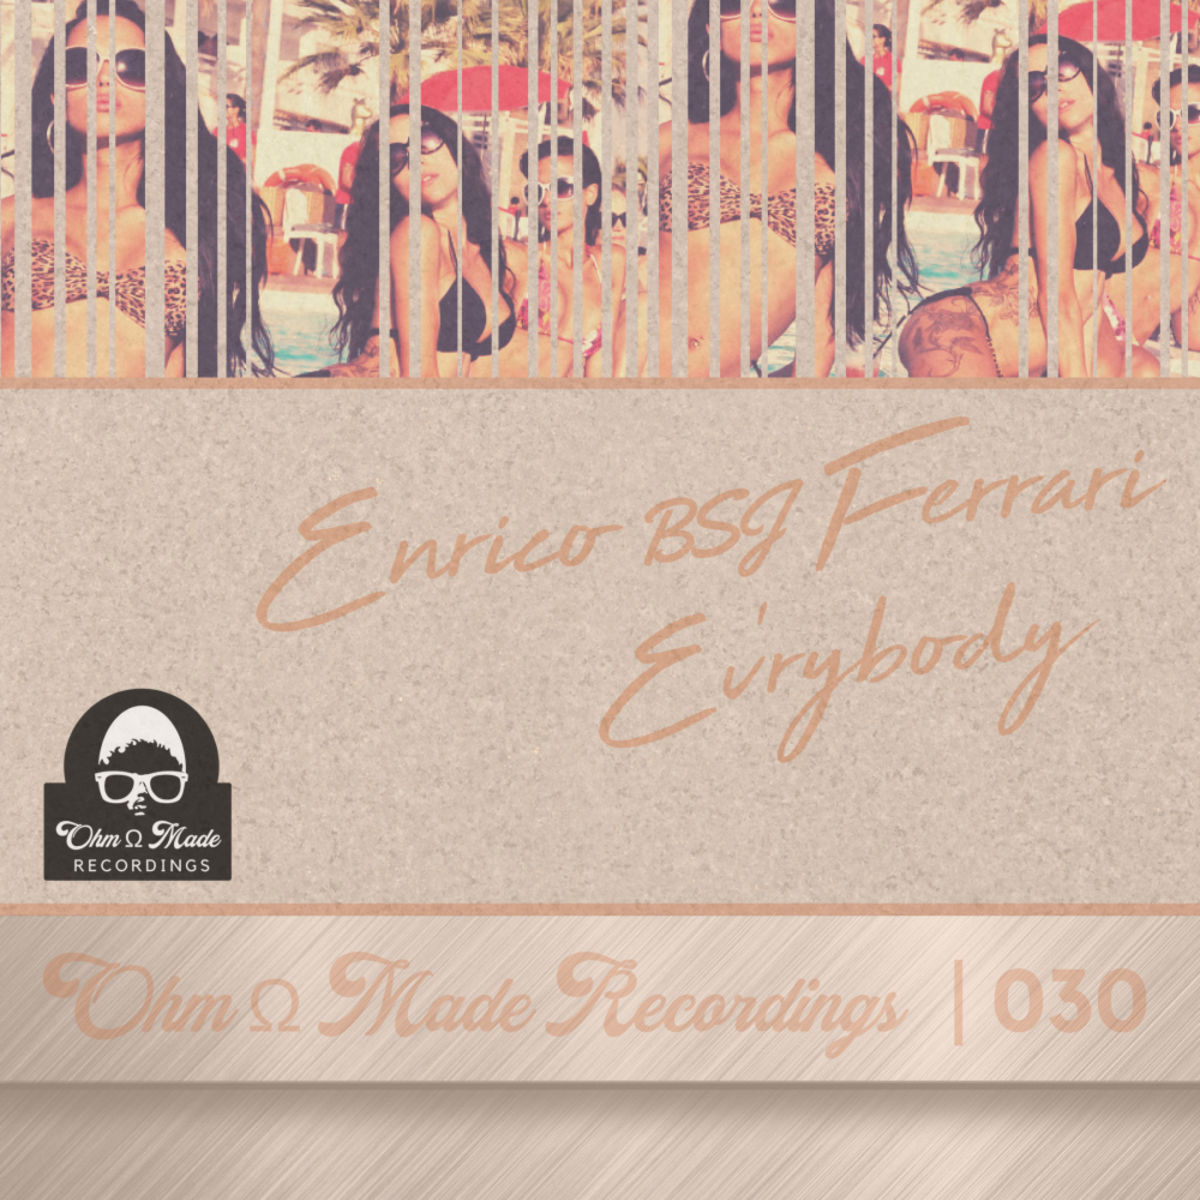 Enrico BSJ Ferrari - Ev'rybody / Ohm Made Recordings